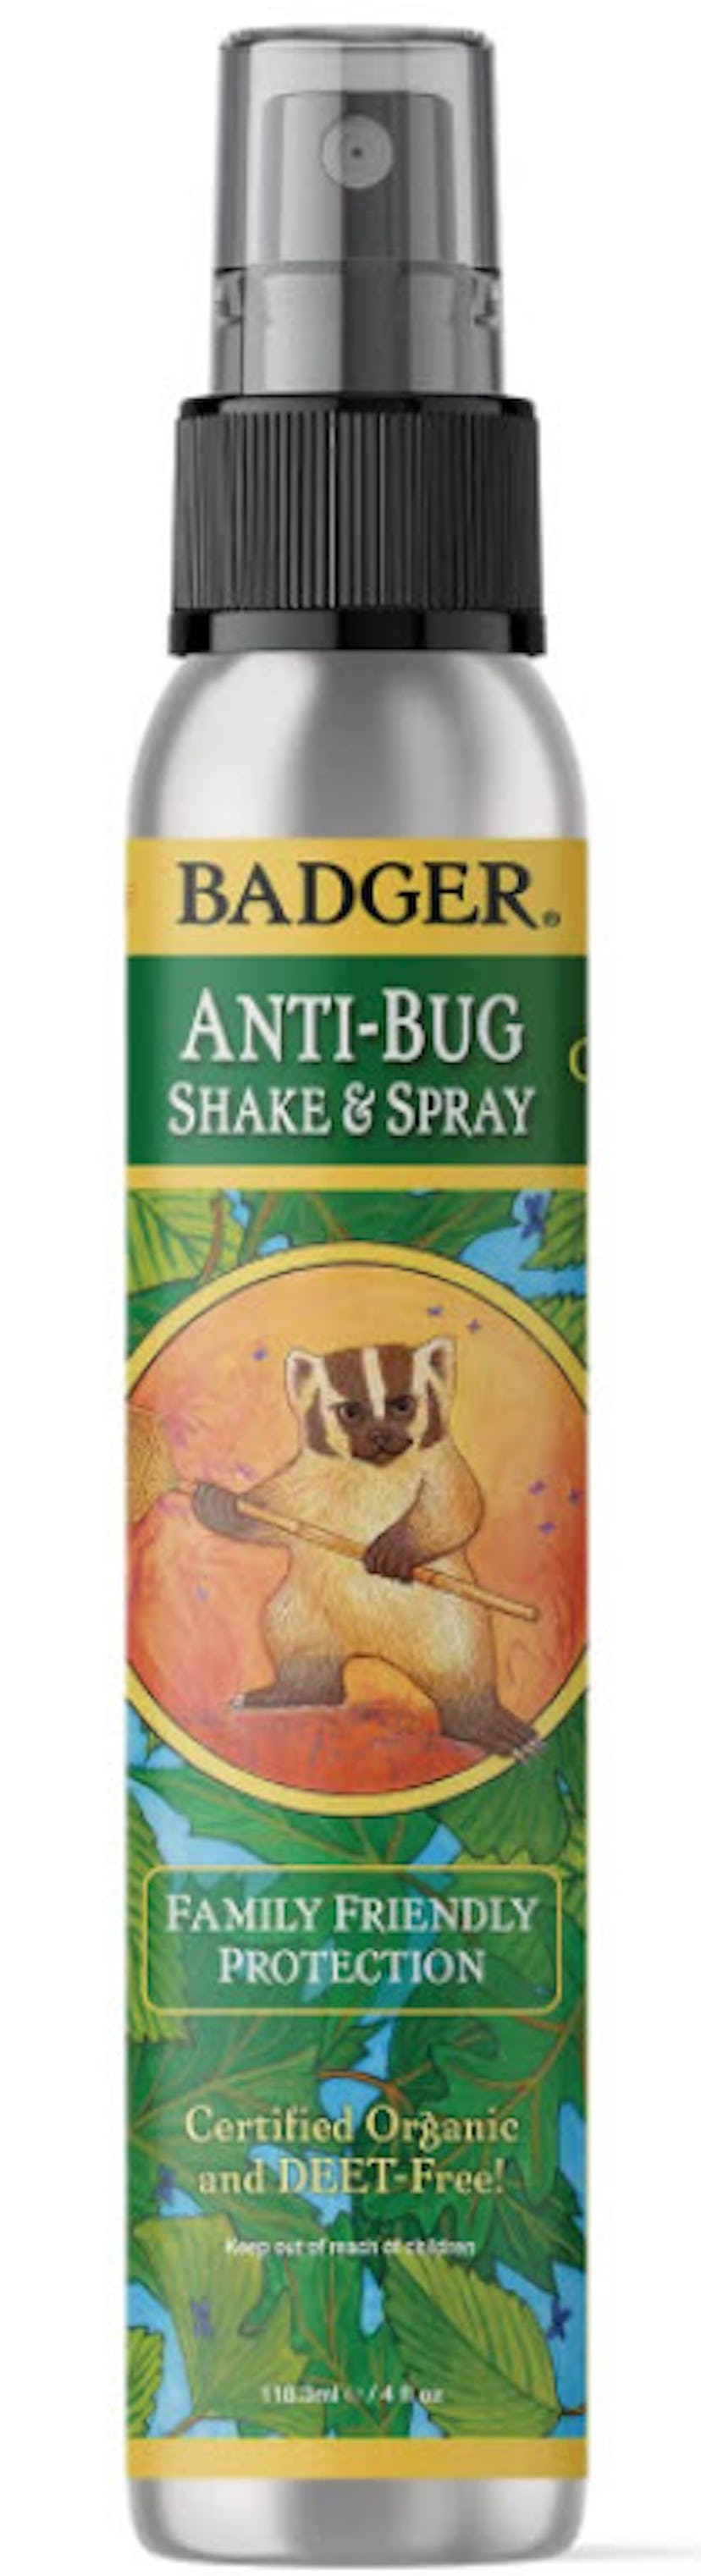 Badger - Anti-Bug Shake & Spray